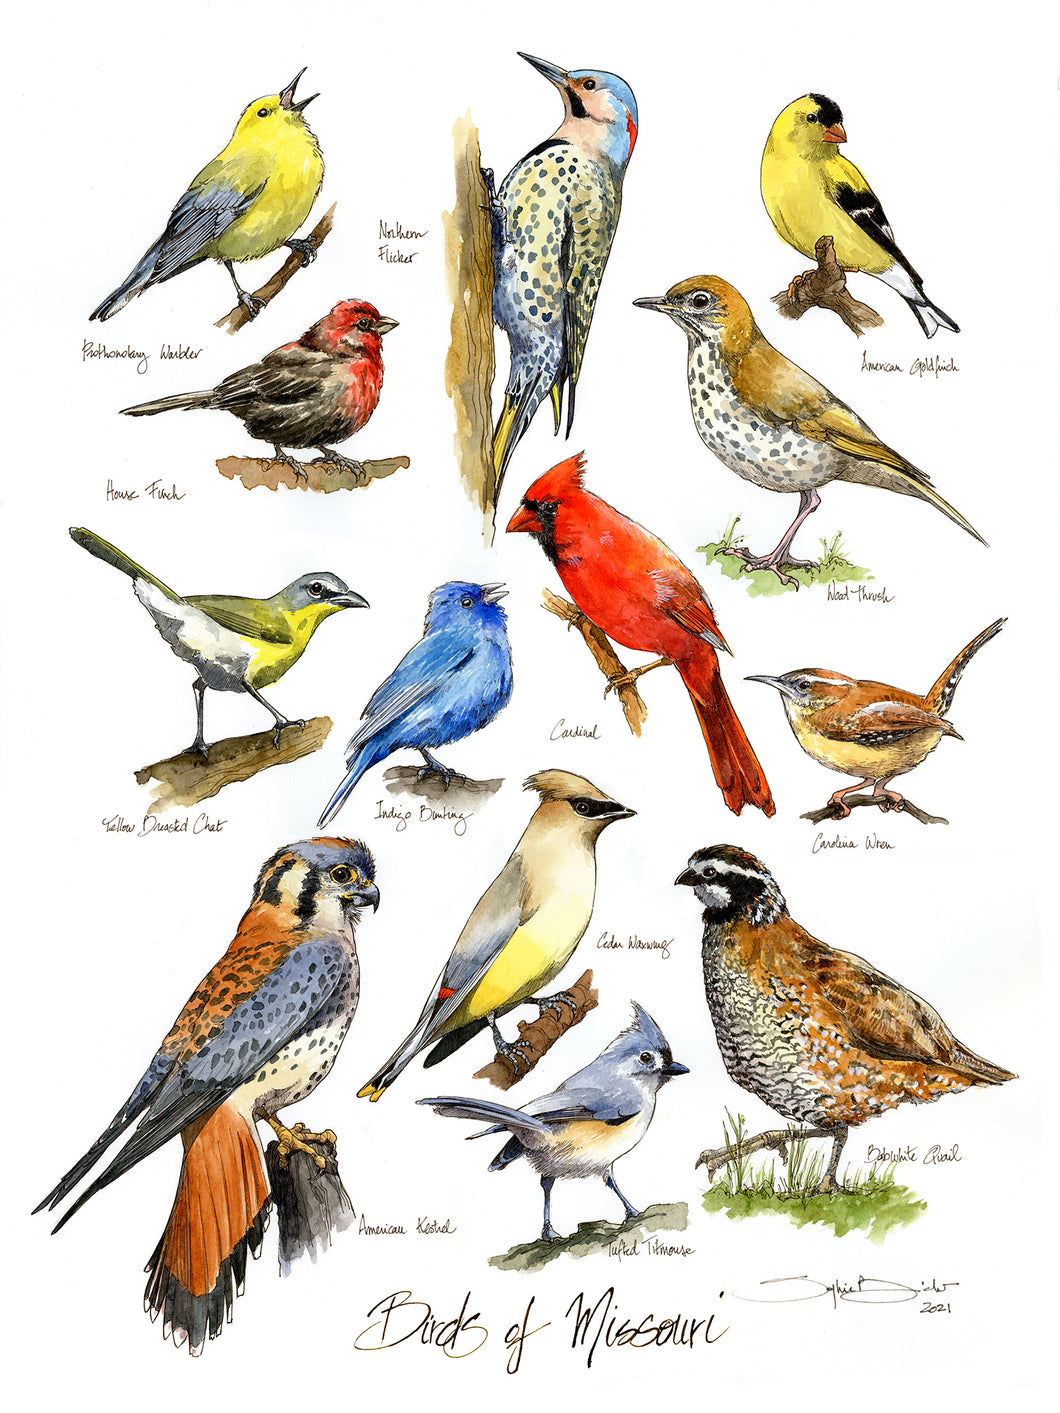 BIRDS OF MISSOURI - Signed Print